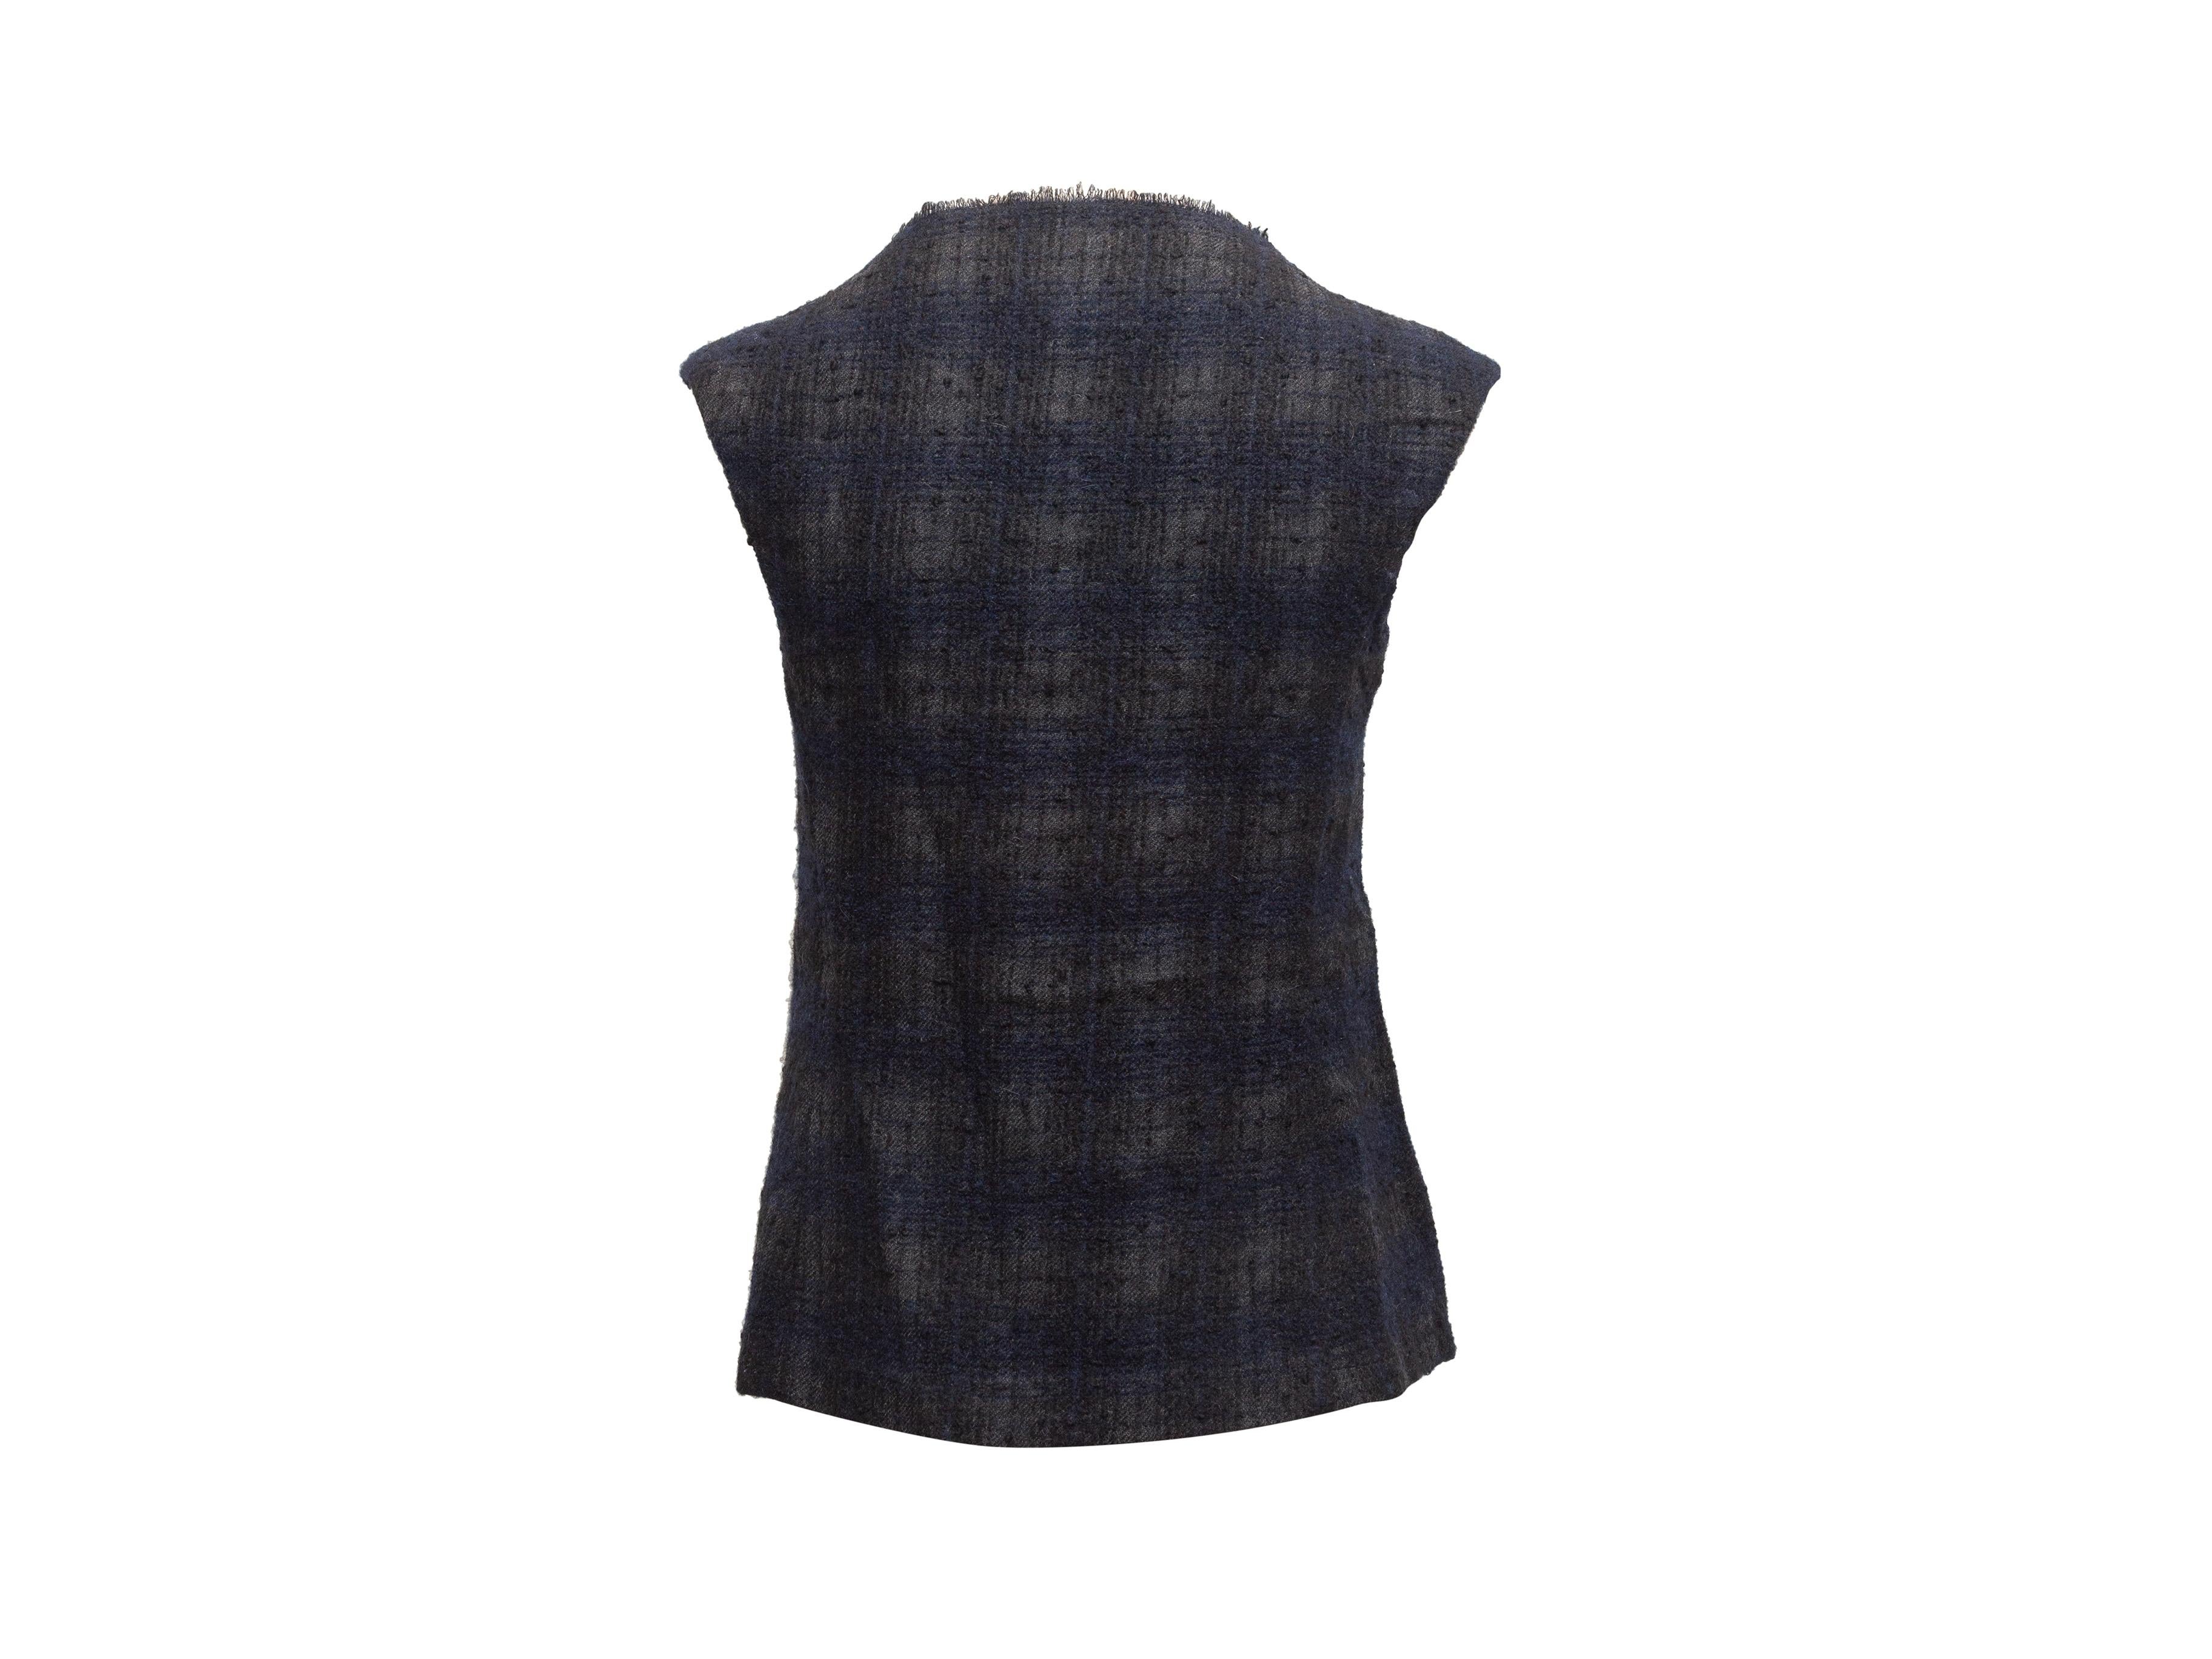 Chanel Black & Navy Wool-Blend Sleeveless Top 3